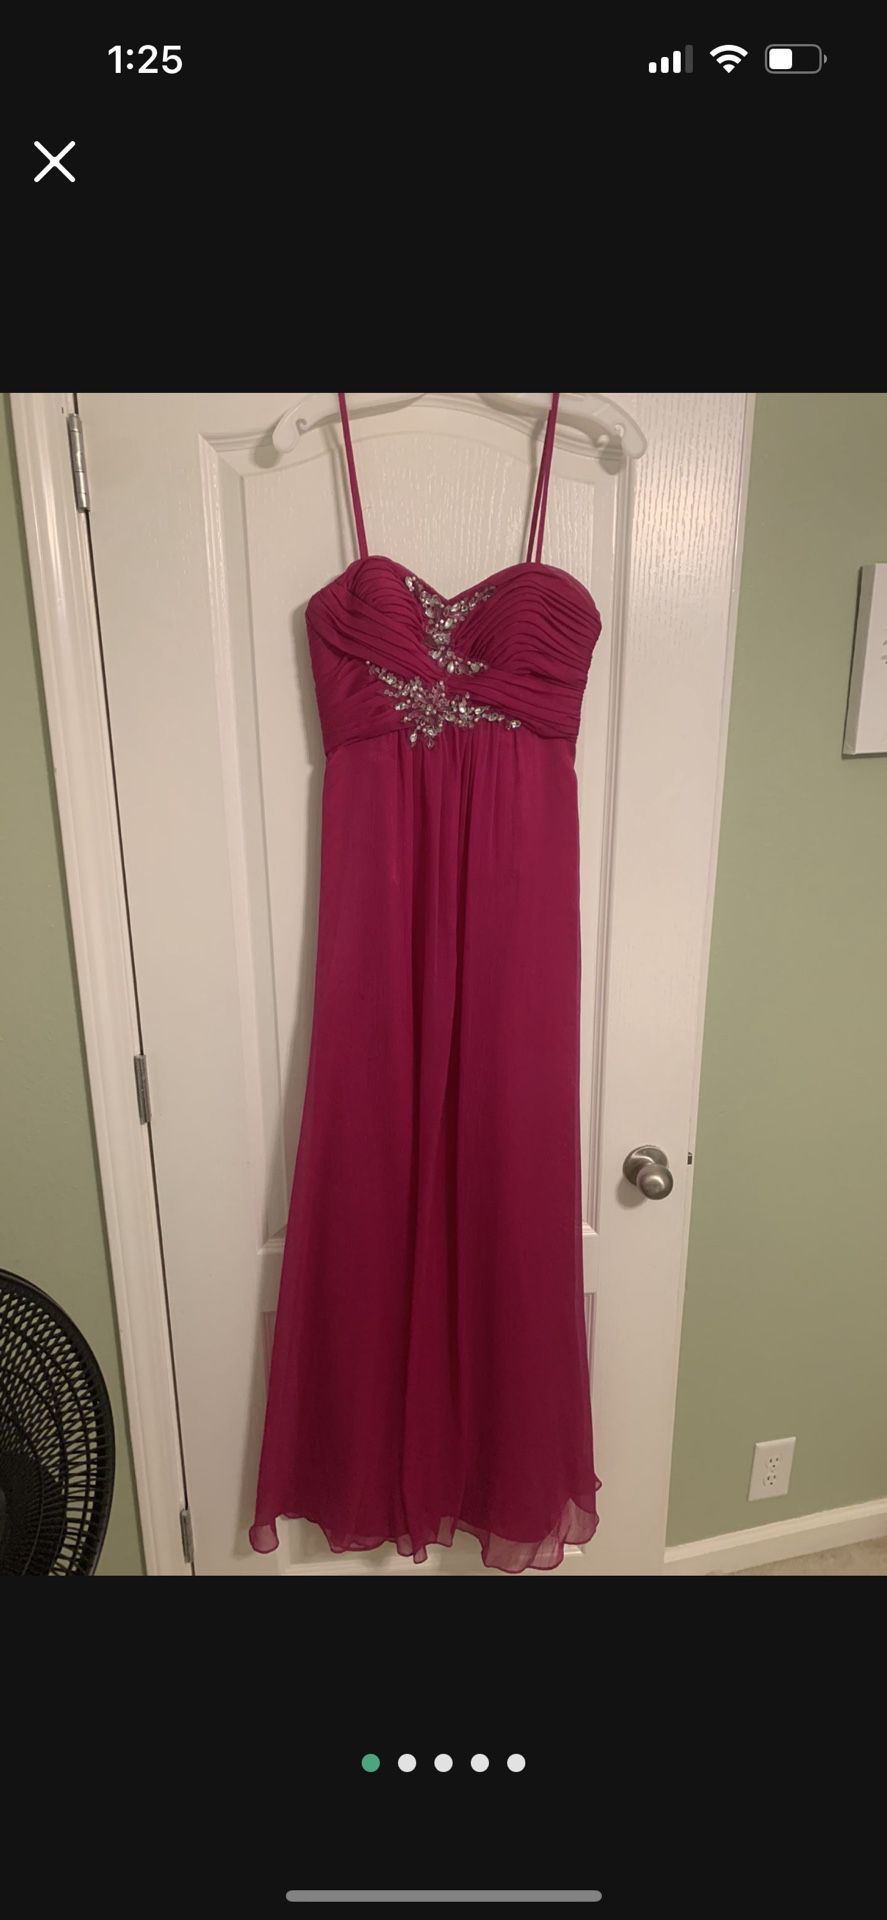 David’s Bridal Long Pink Fuchsia Formal Dress Size 2